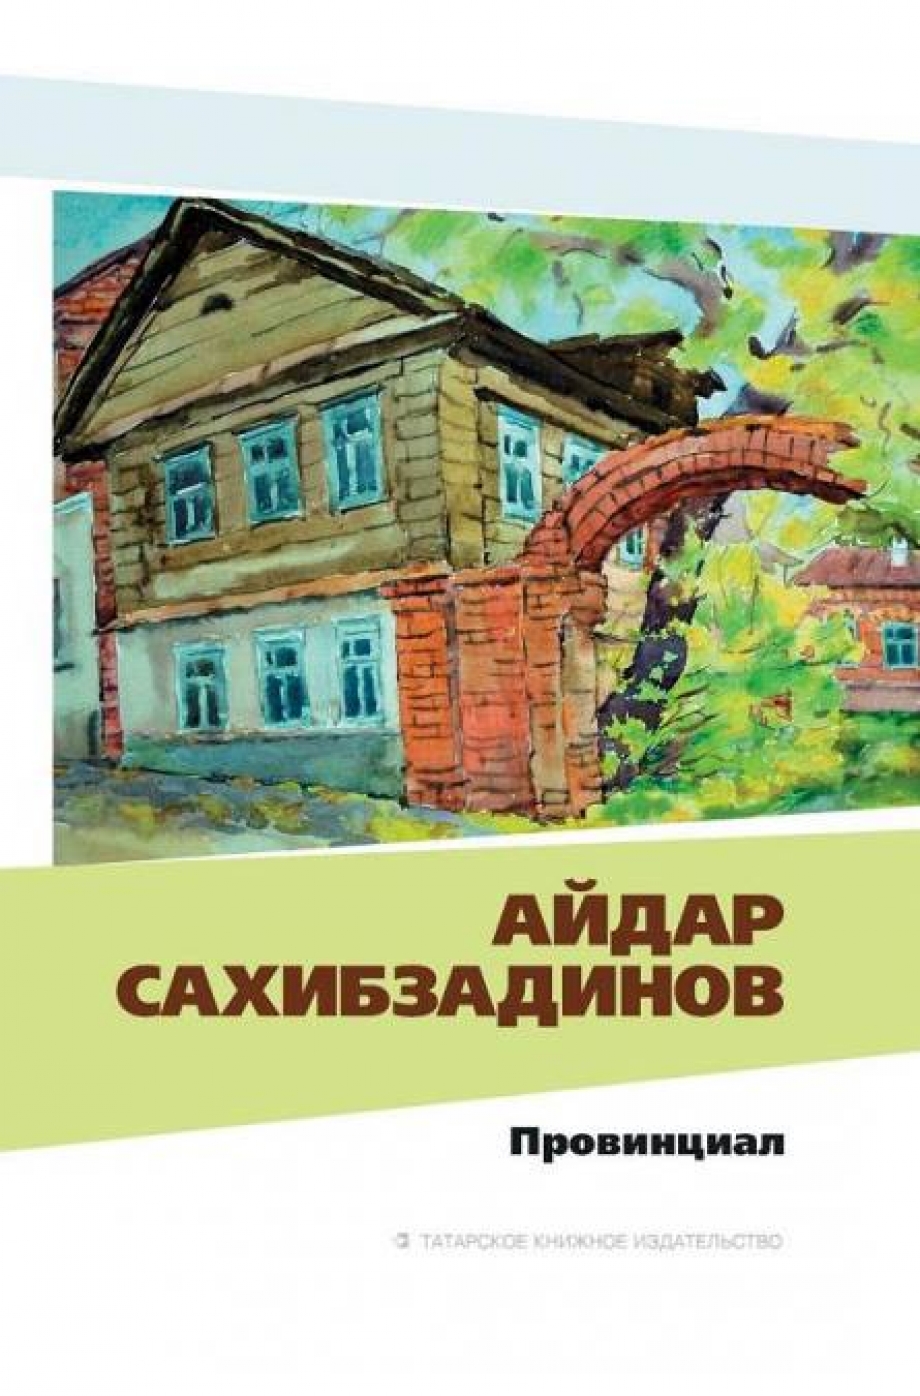 Сборник «Провинциал» Айдара Сахибзадинова – среди лучших книг года